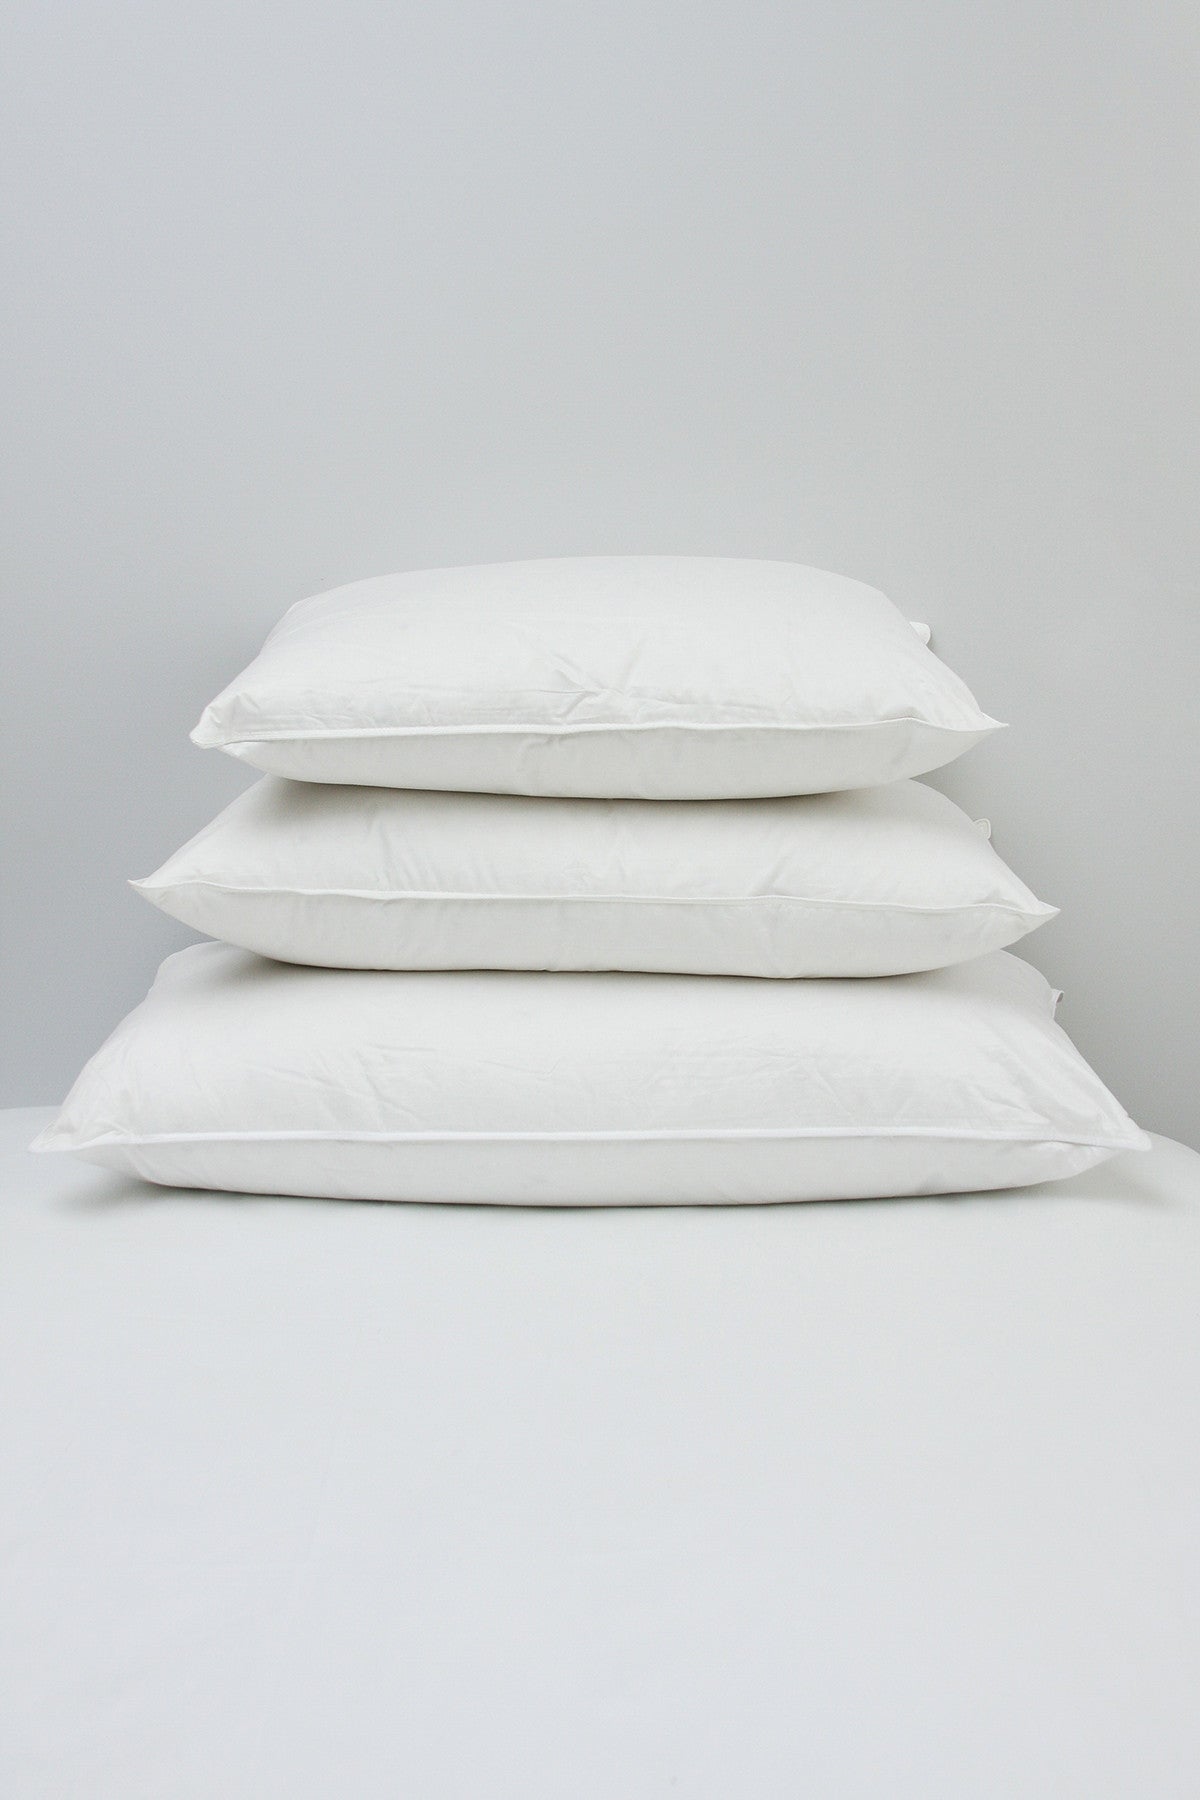 Shop Supreme Pillow Cover online